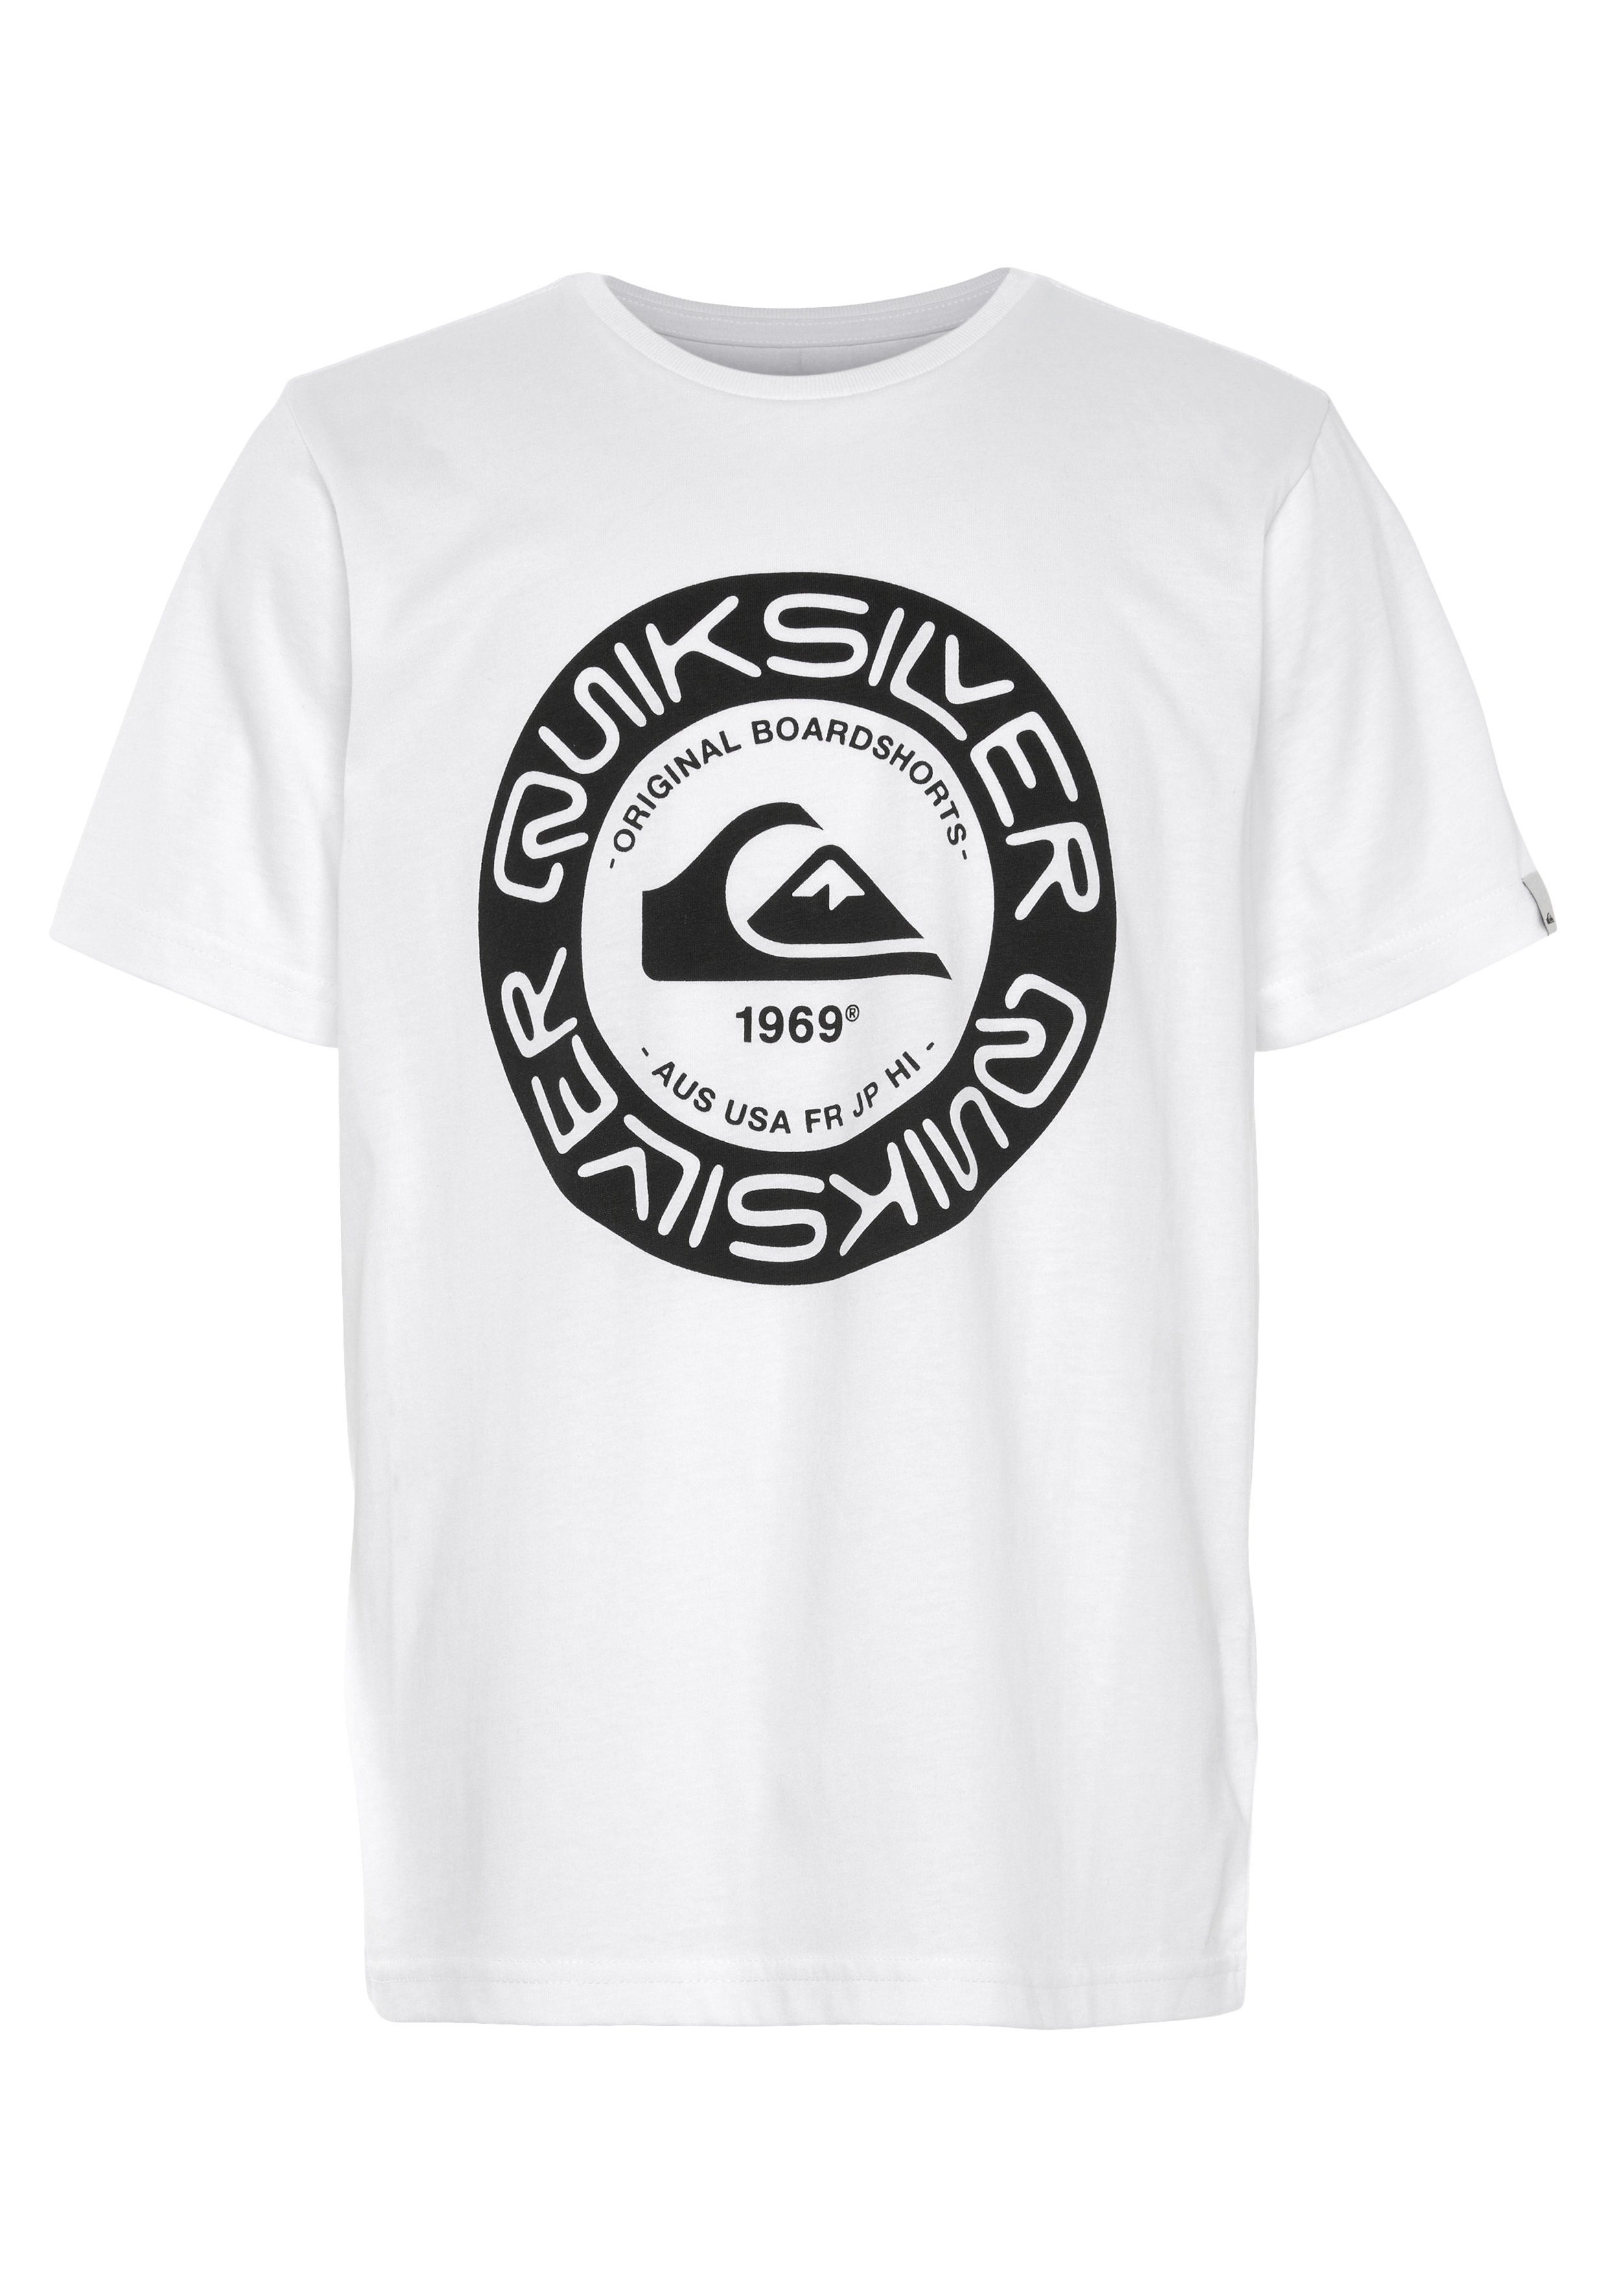 Quiksilver T-Shirt Jungen Doppelpack Logodruck (Packung, mit 2-tlg)